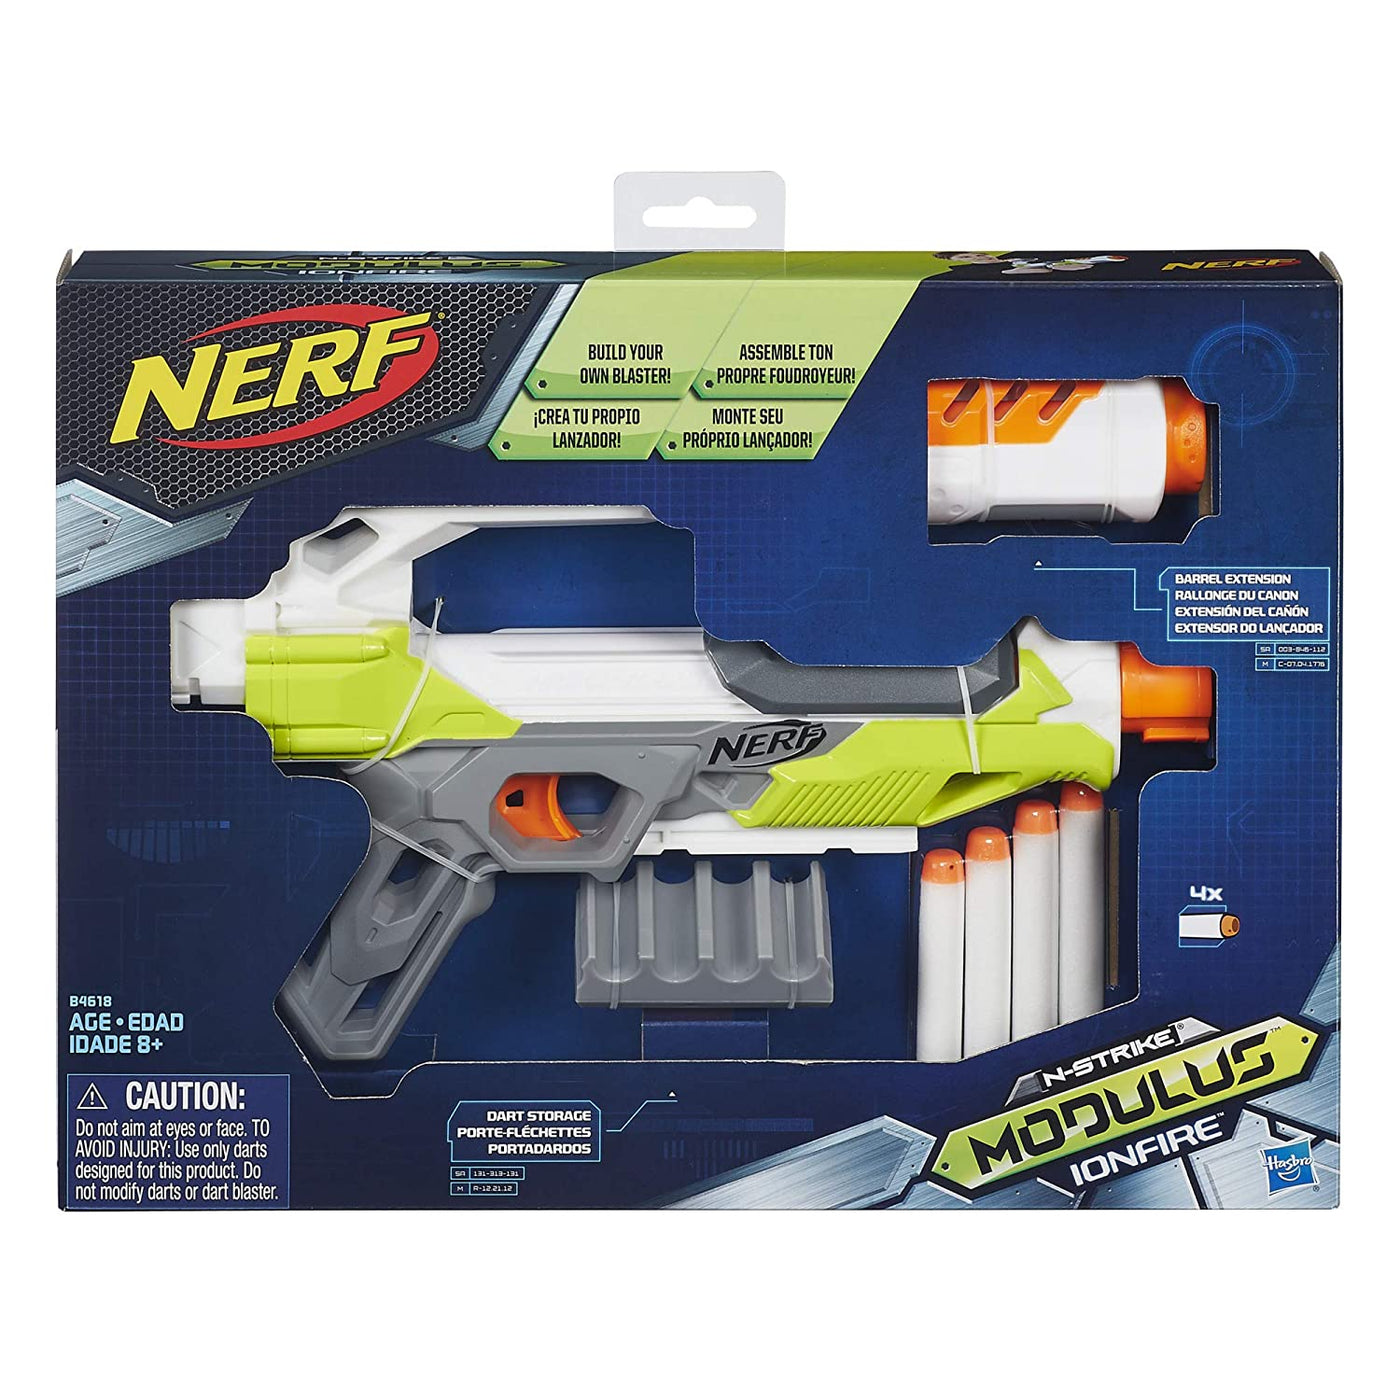 N-Strike Modulus IonFire Blaster | Nerf by Hasbro, USA Toy